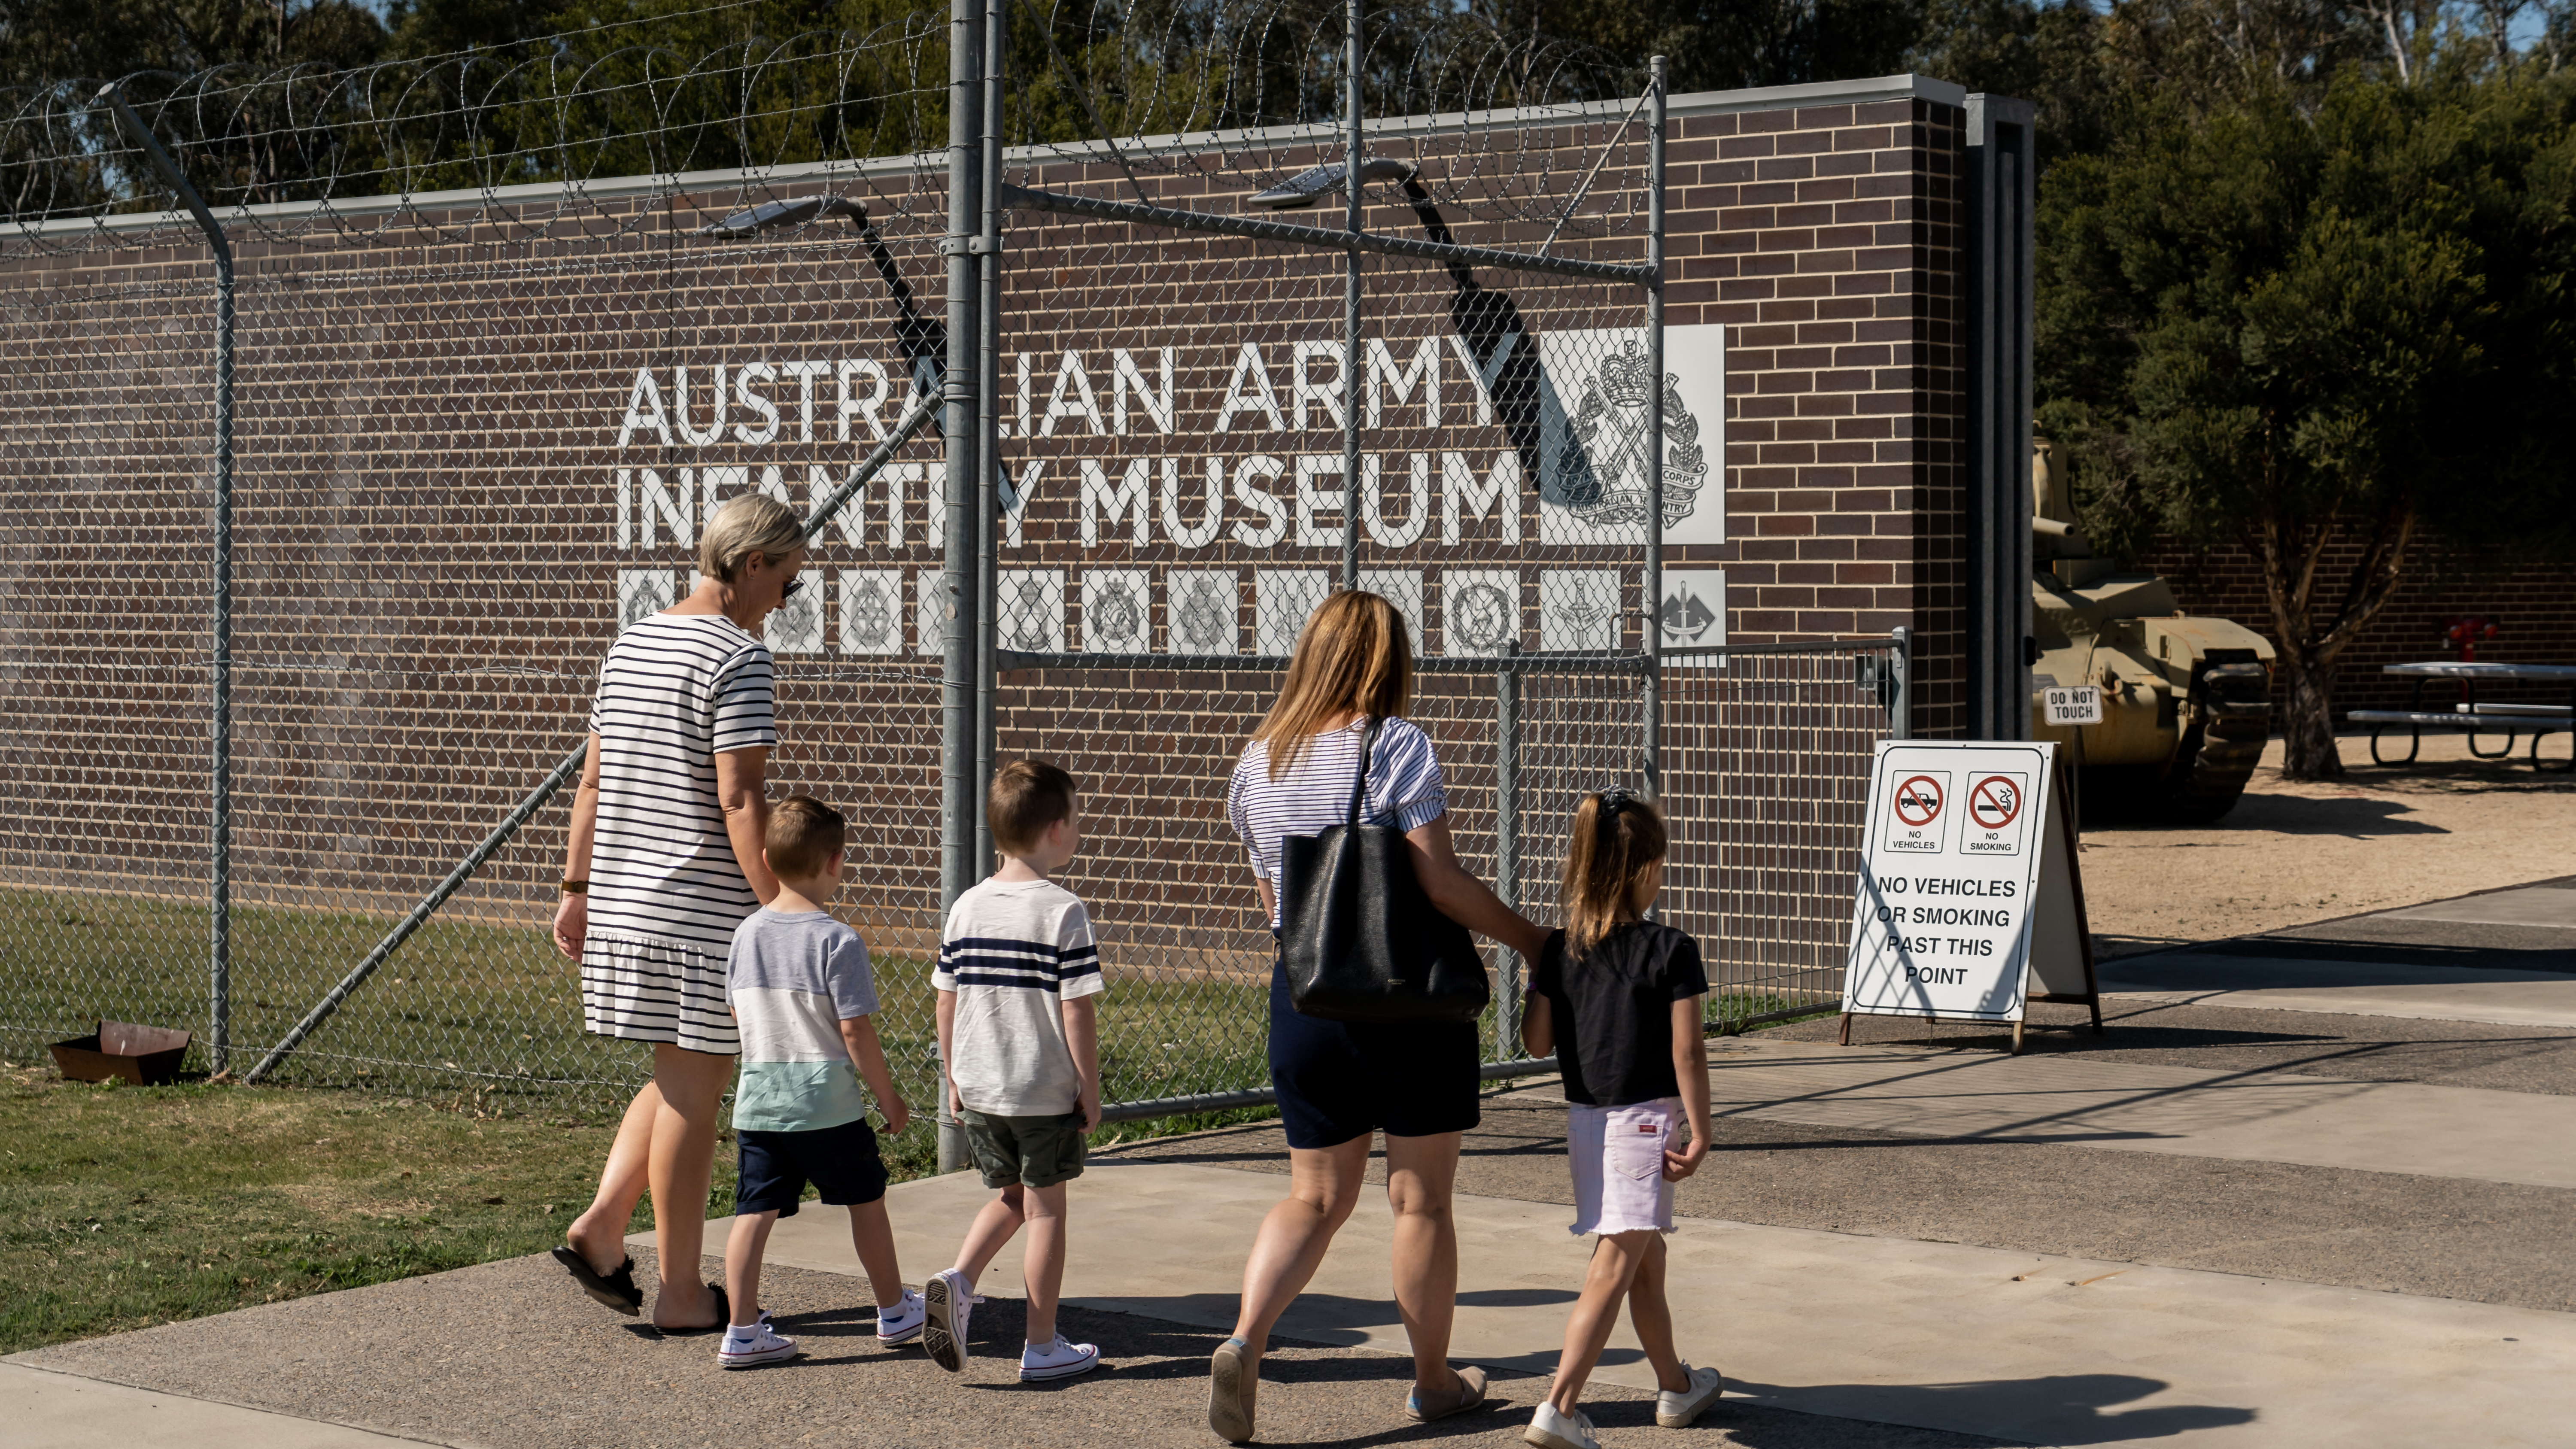 Australian Army Infantry Museum - family entering gate